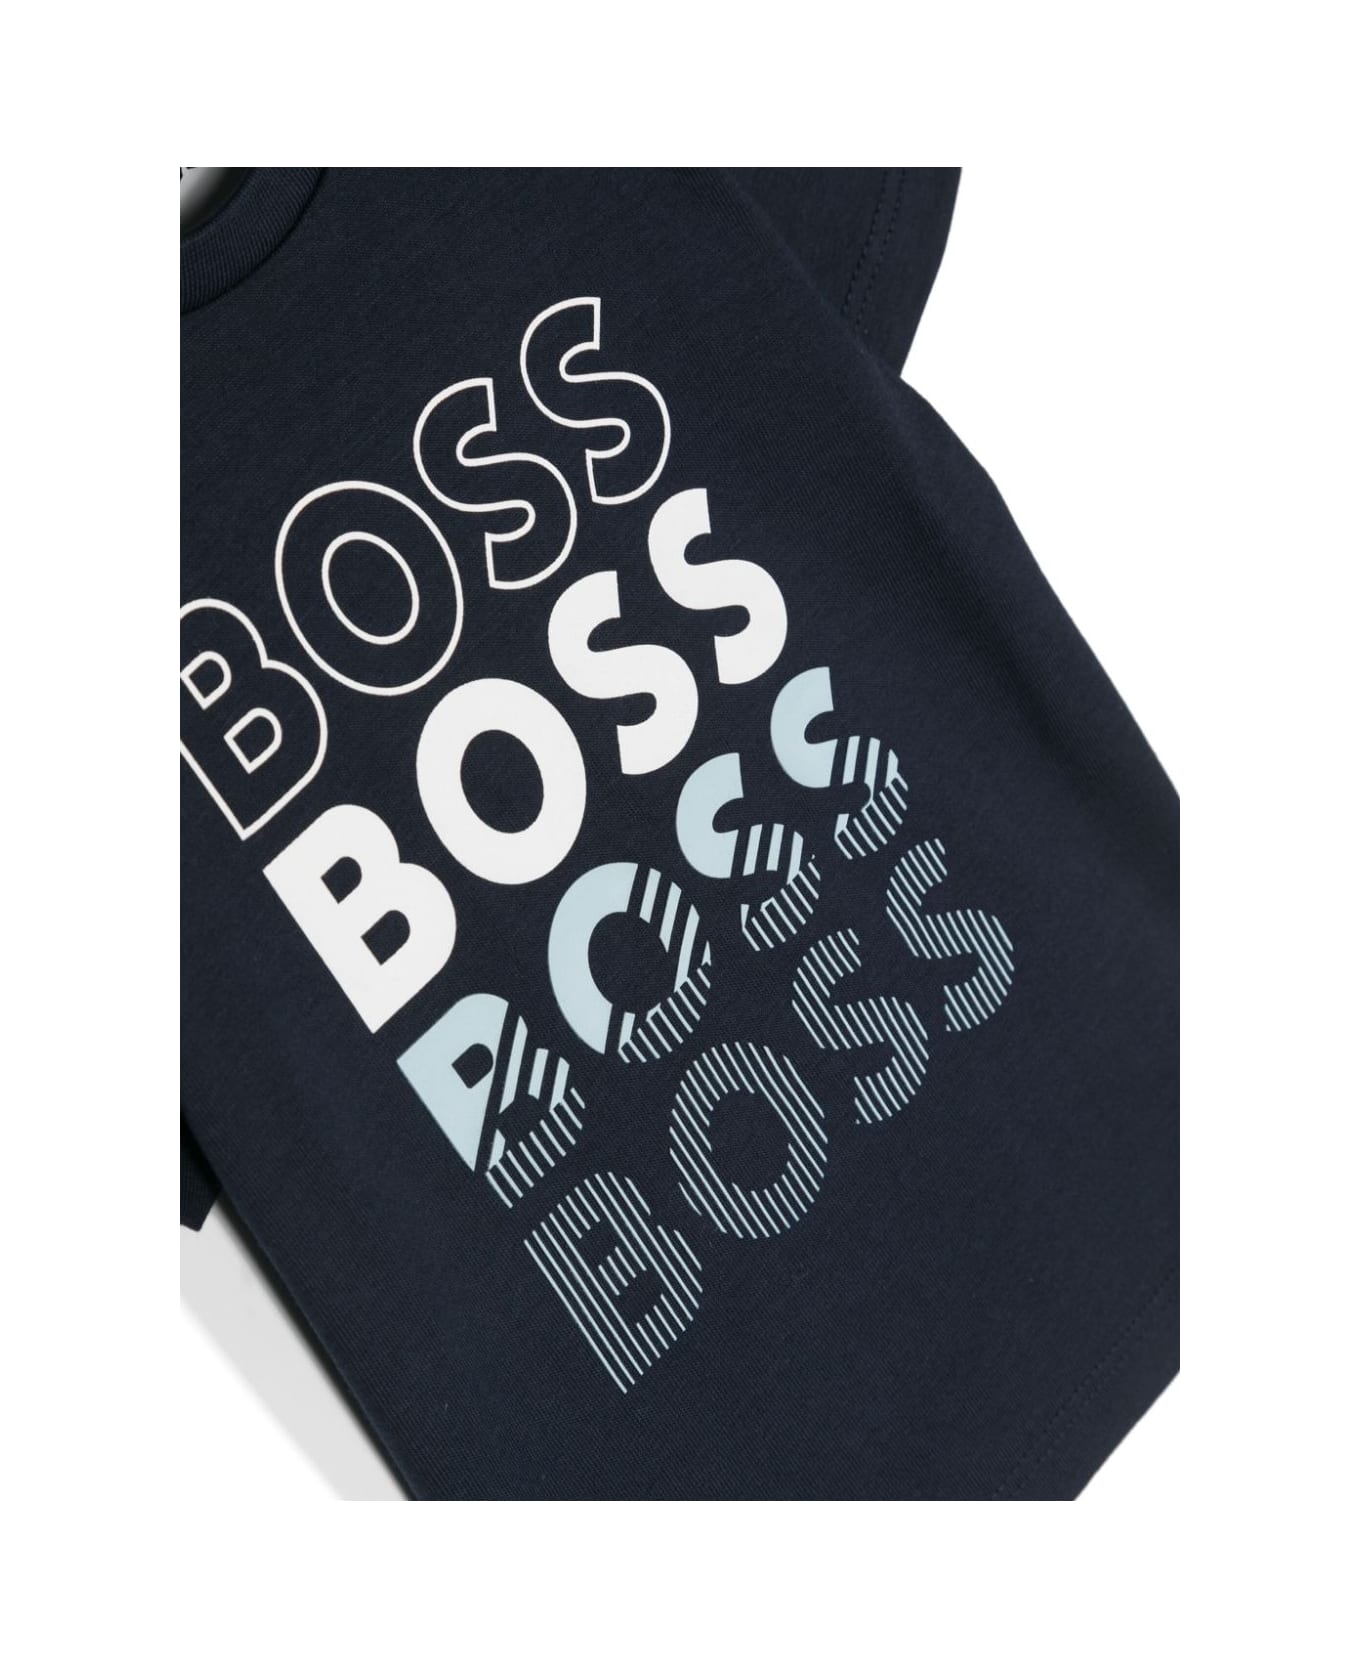 Hugo Boss T-shirt With Print - Blue